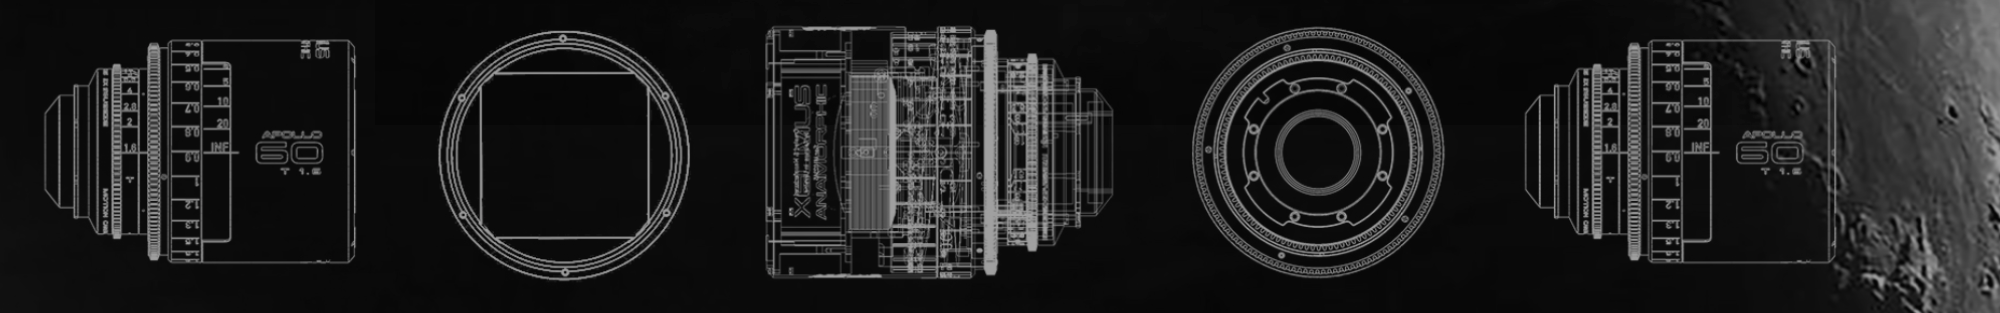 Xelmus Apollo 2x Anamorphic Lens diagram